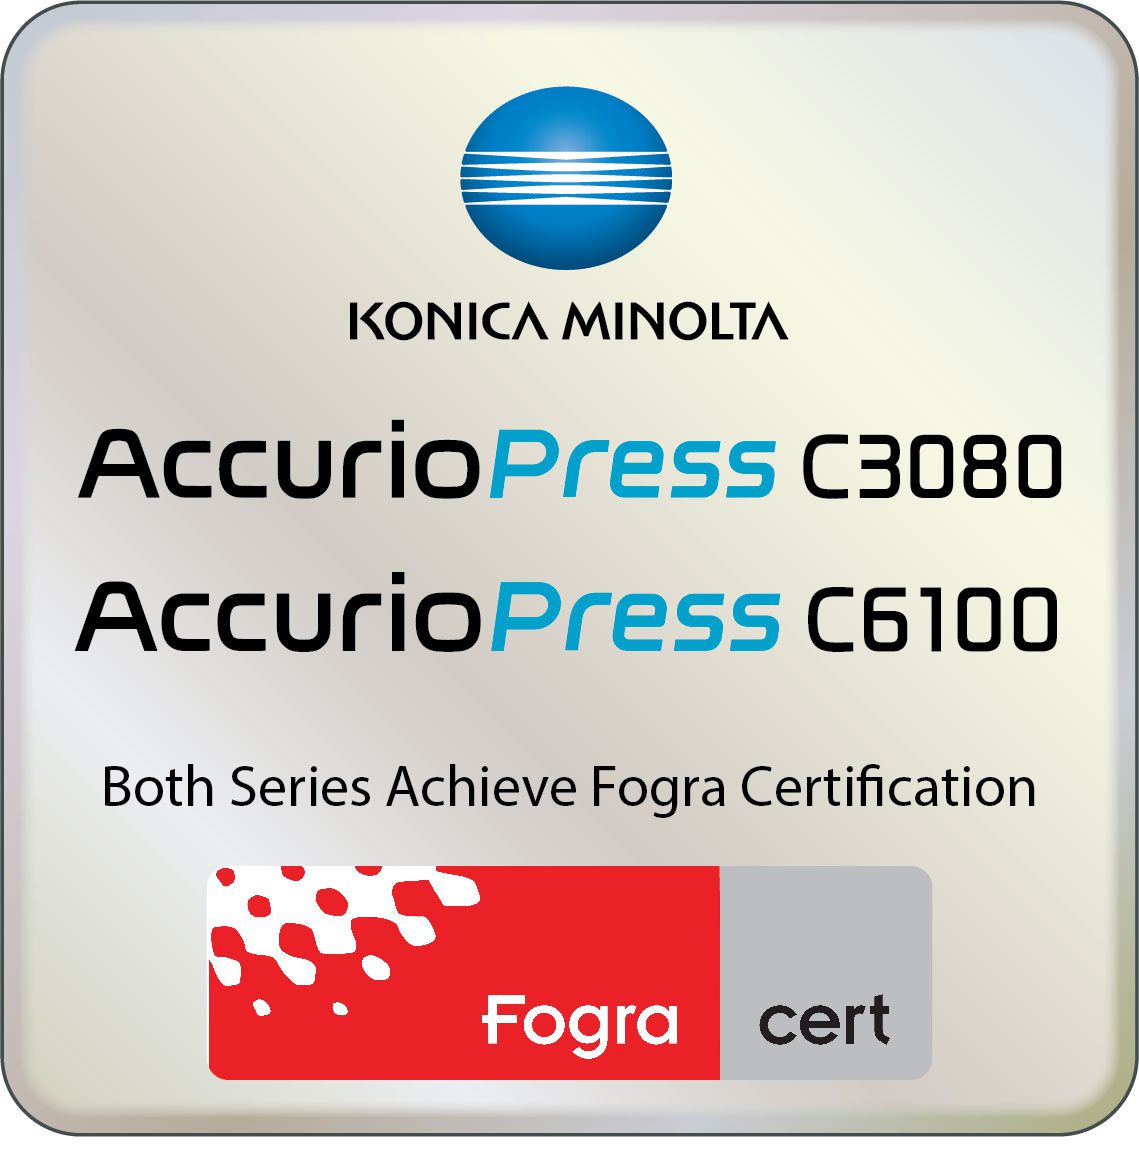 Konica Minolta’s AccurioPress C3080 Series and C6100 Series Achieve Fogra Certification